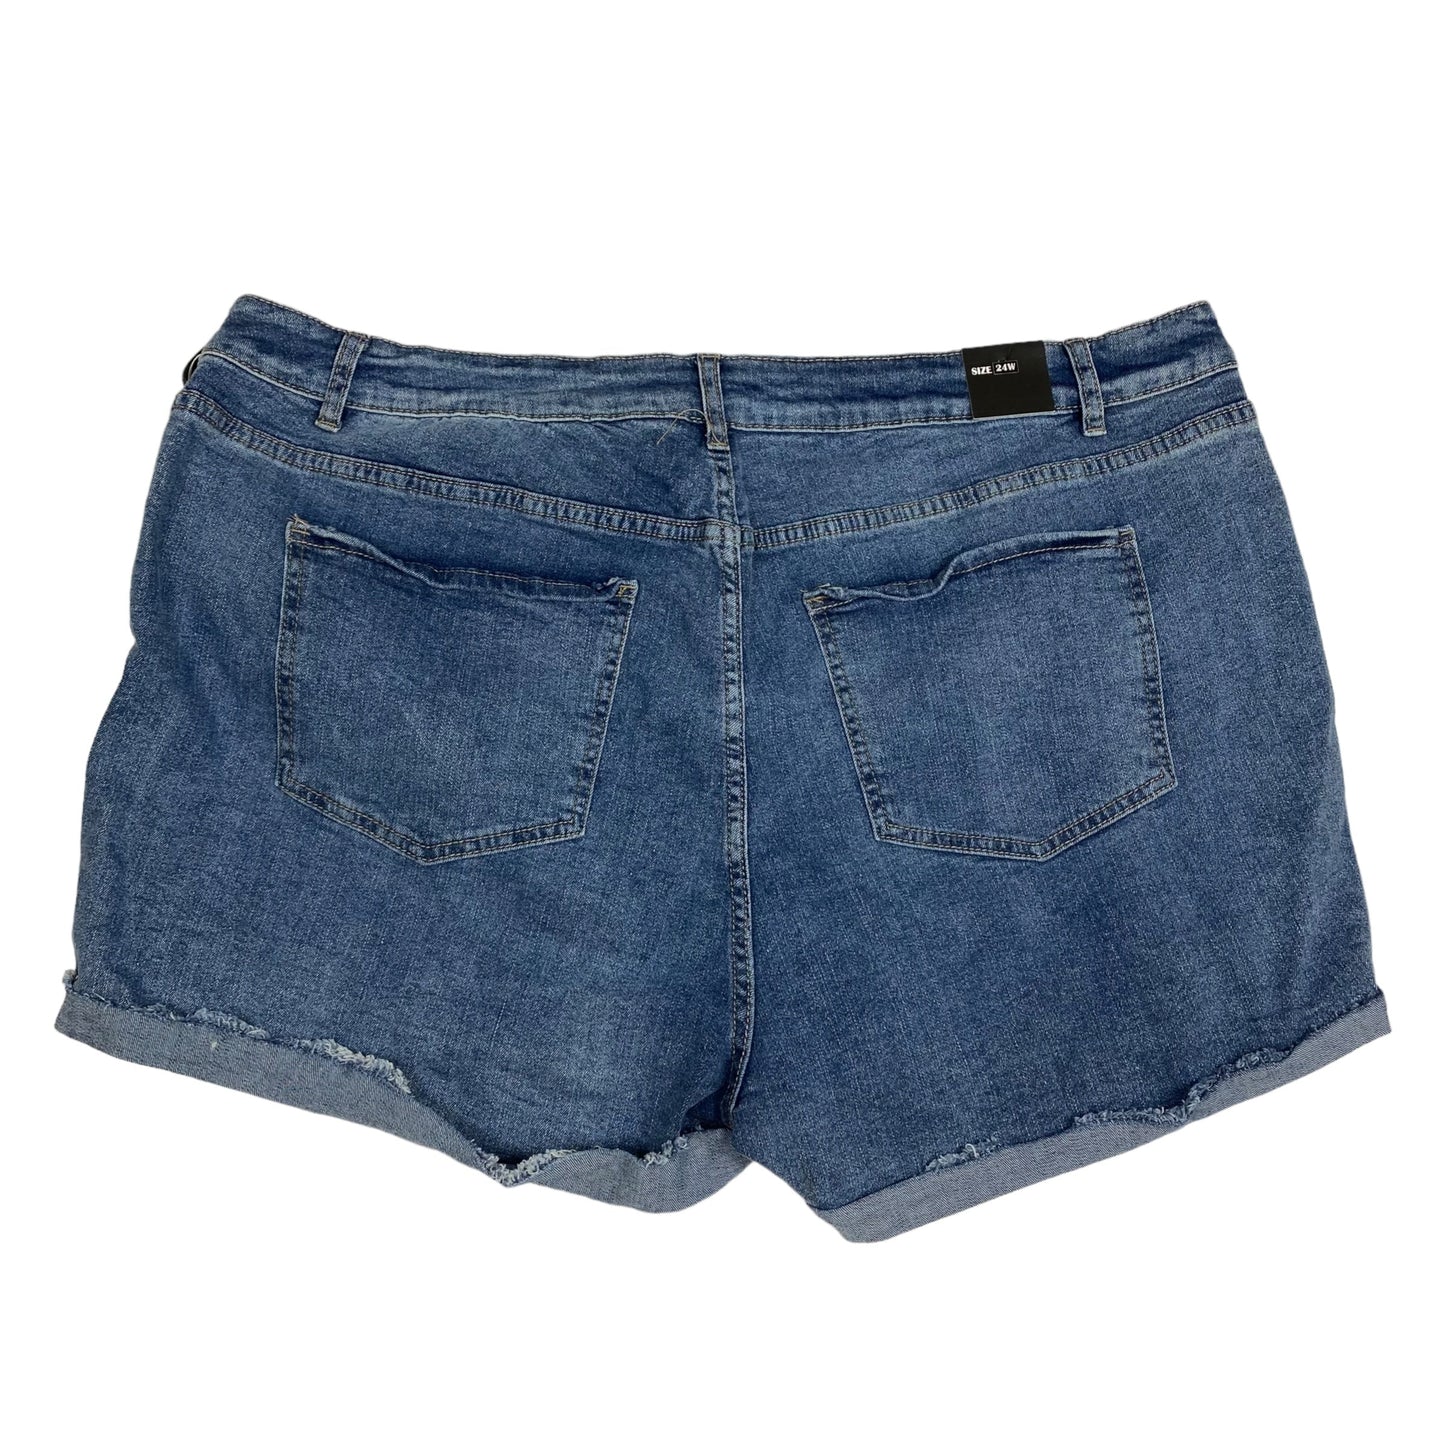 Shorts By Traffic Jeans Wear  Size: 3x